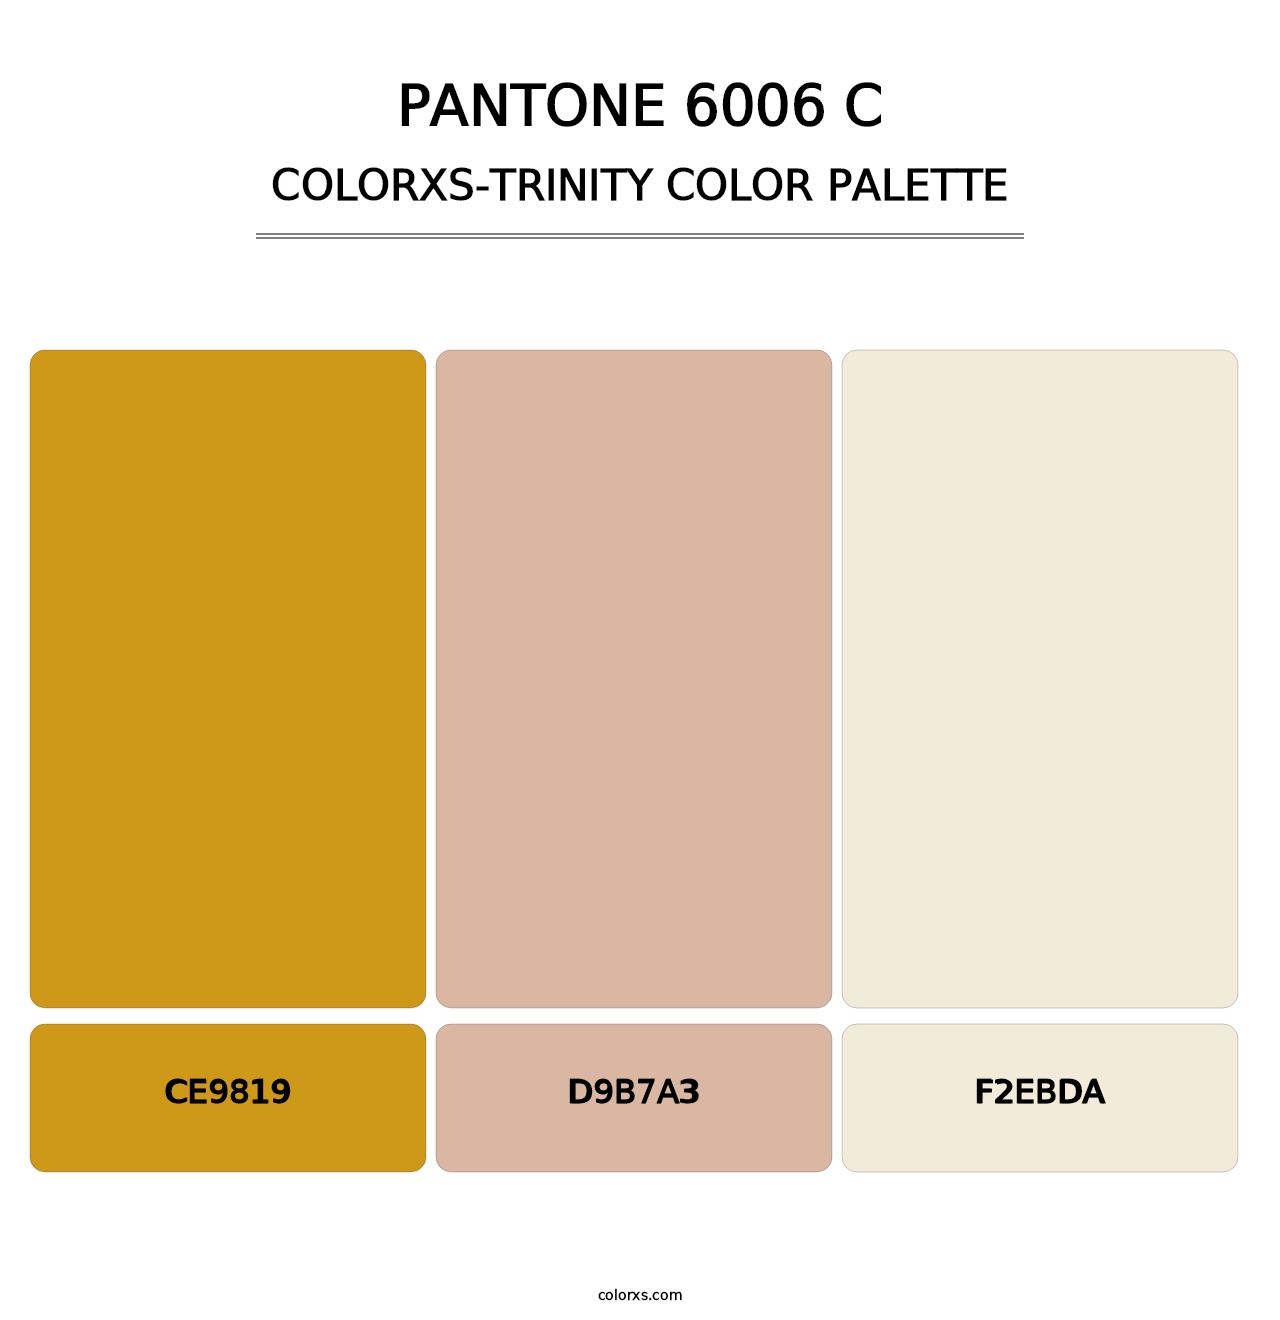 PANTONE 6006 C - Colorxs Trinity Palette